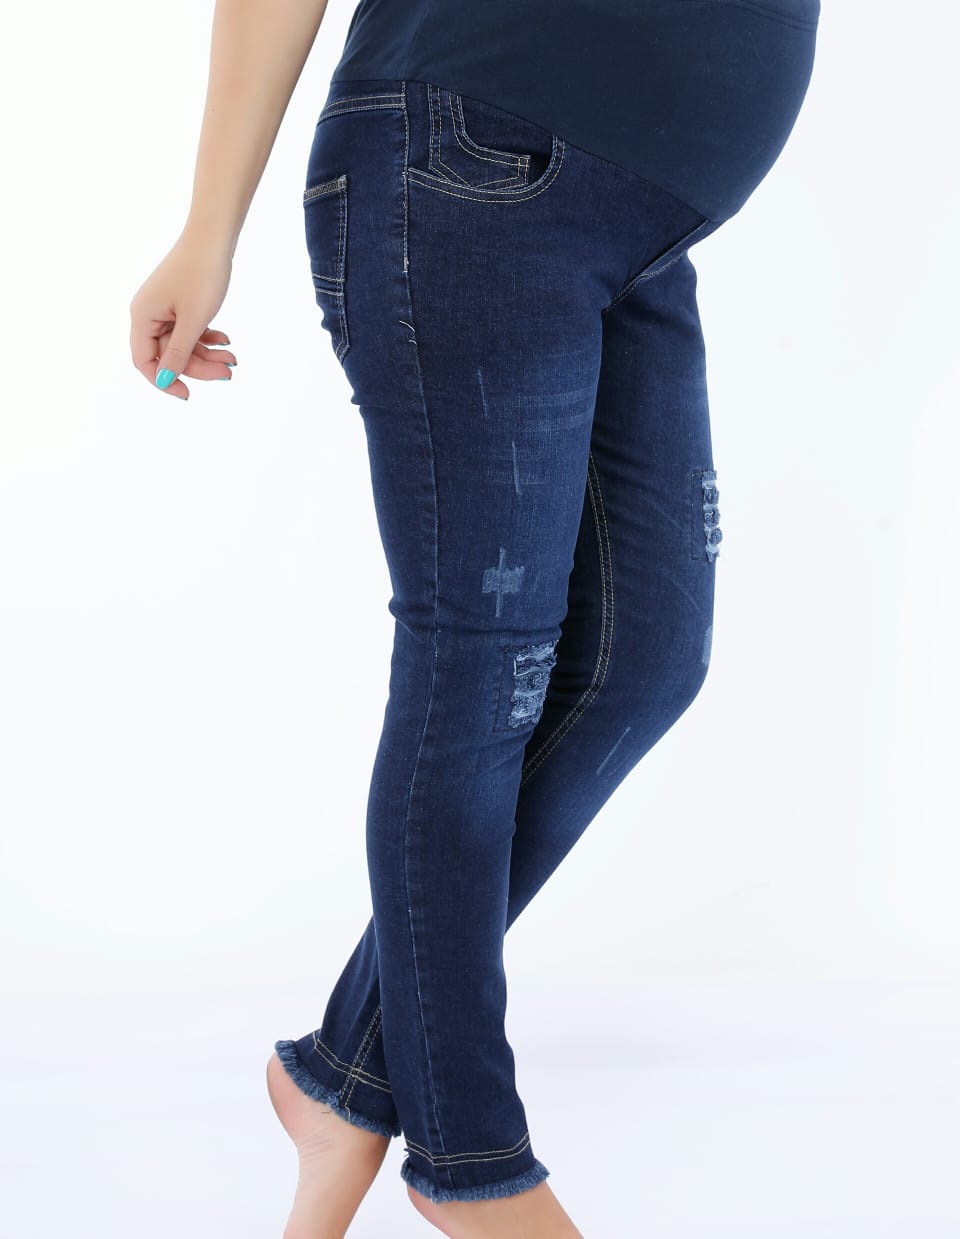 Blue navy Jeans pants for pregnant women, model 405